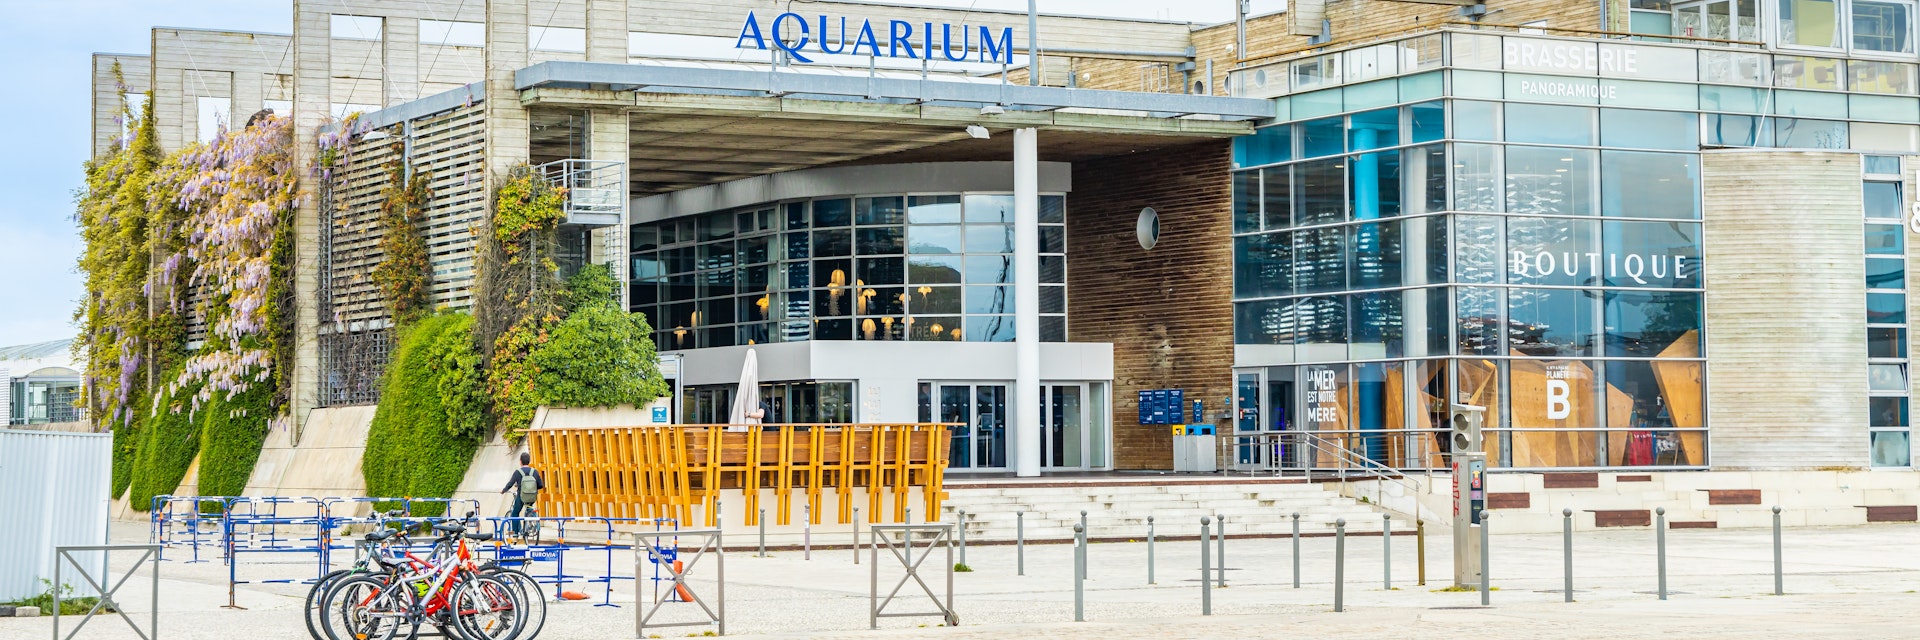 Entrance of the Aquarium of La Rochelle, France in summer.